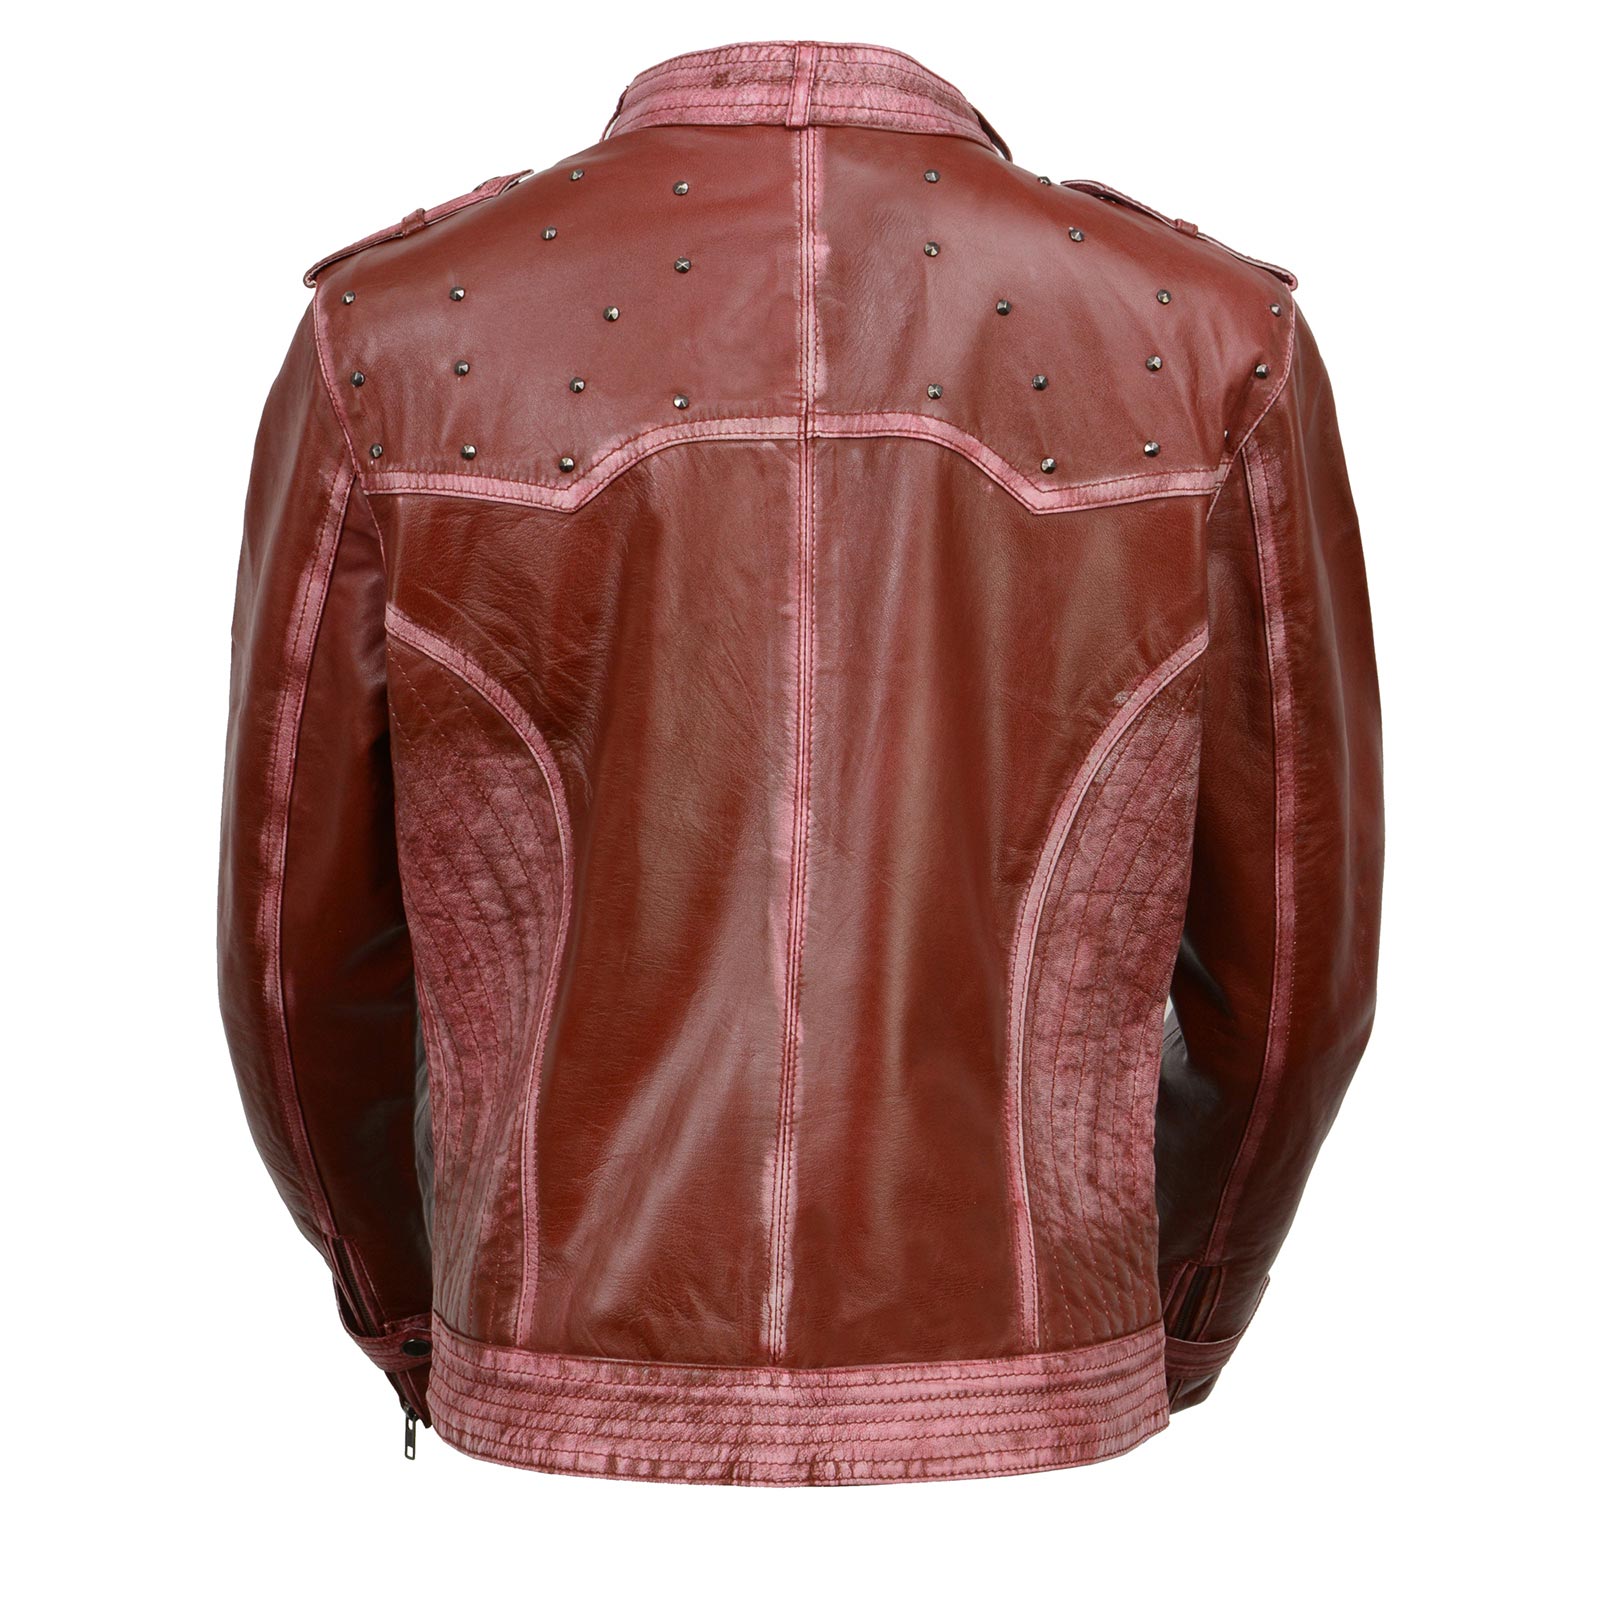 Milwaukee Leather SFL2840 Women's Maiden Maroon Premium Sheepskin Motorcycle Fashion Leather Jacket with Studs